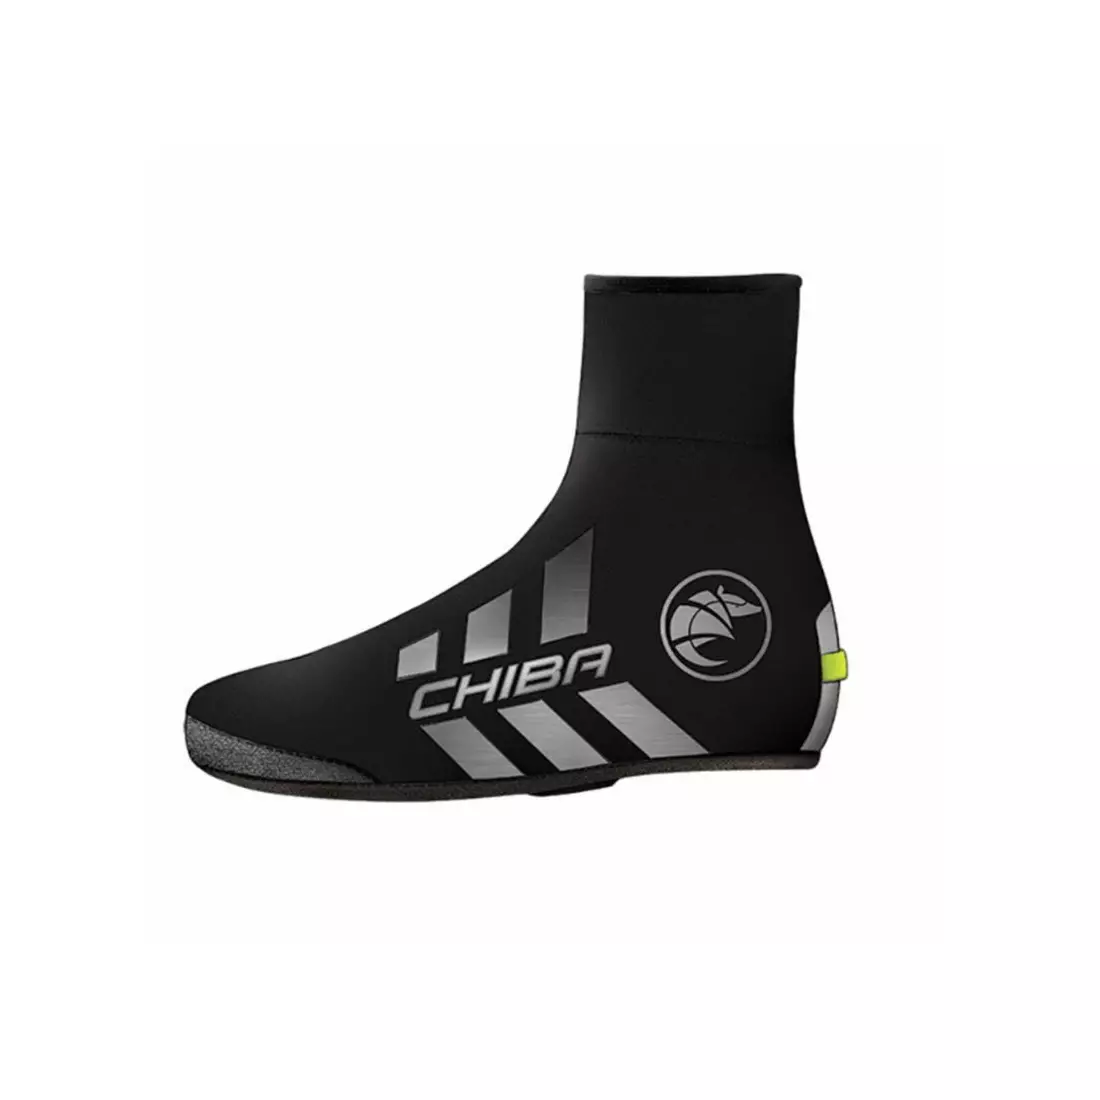 CHIBA FULL NEOPREN Rain protectors for bicycle shoes, black 31499C-3